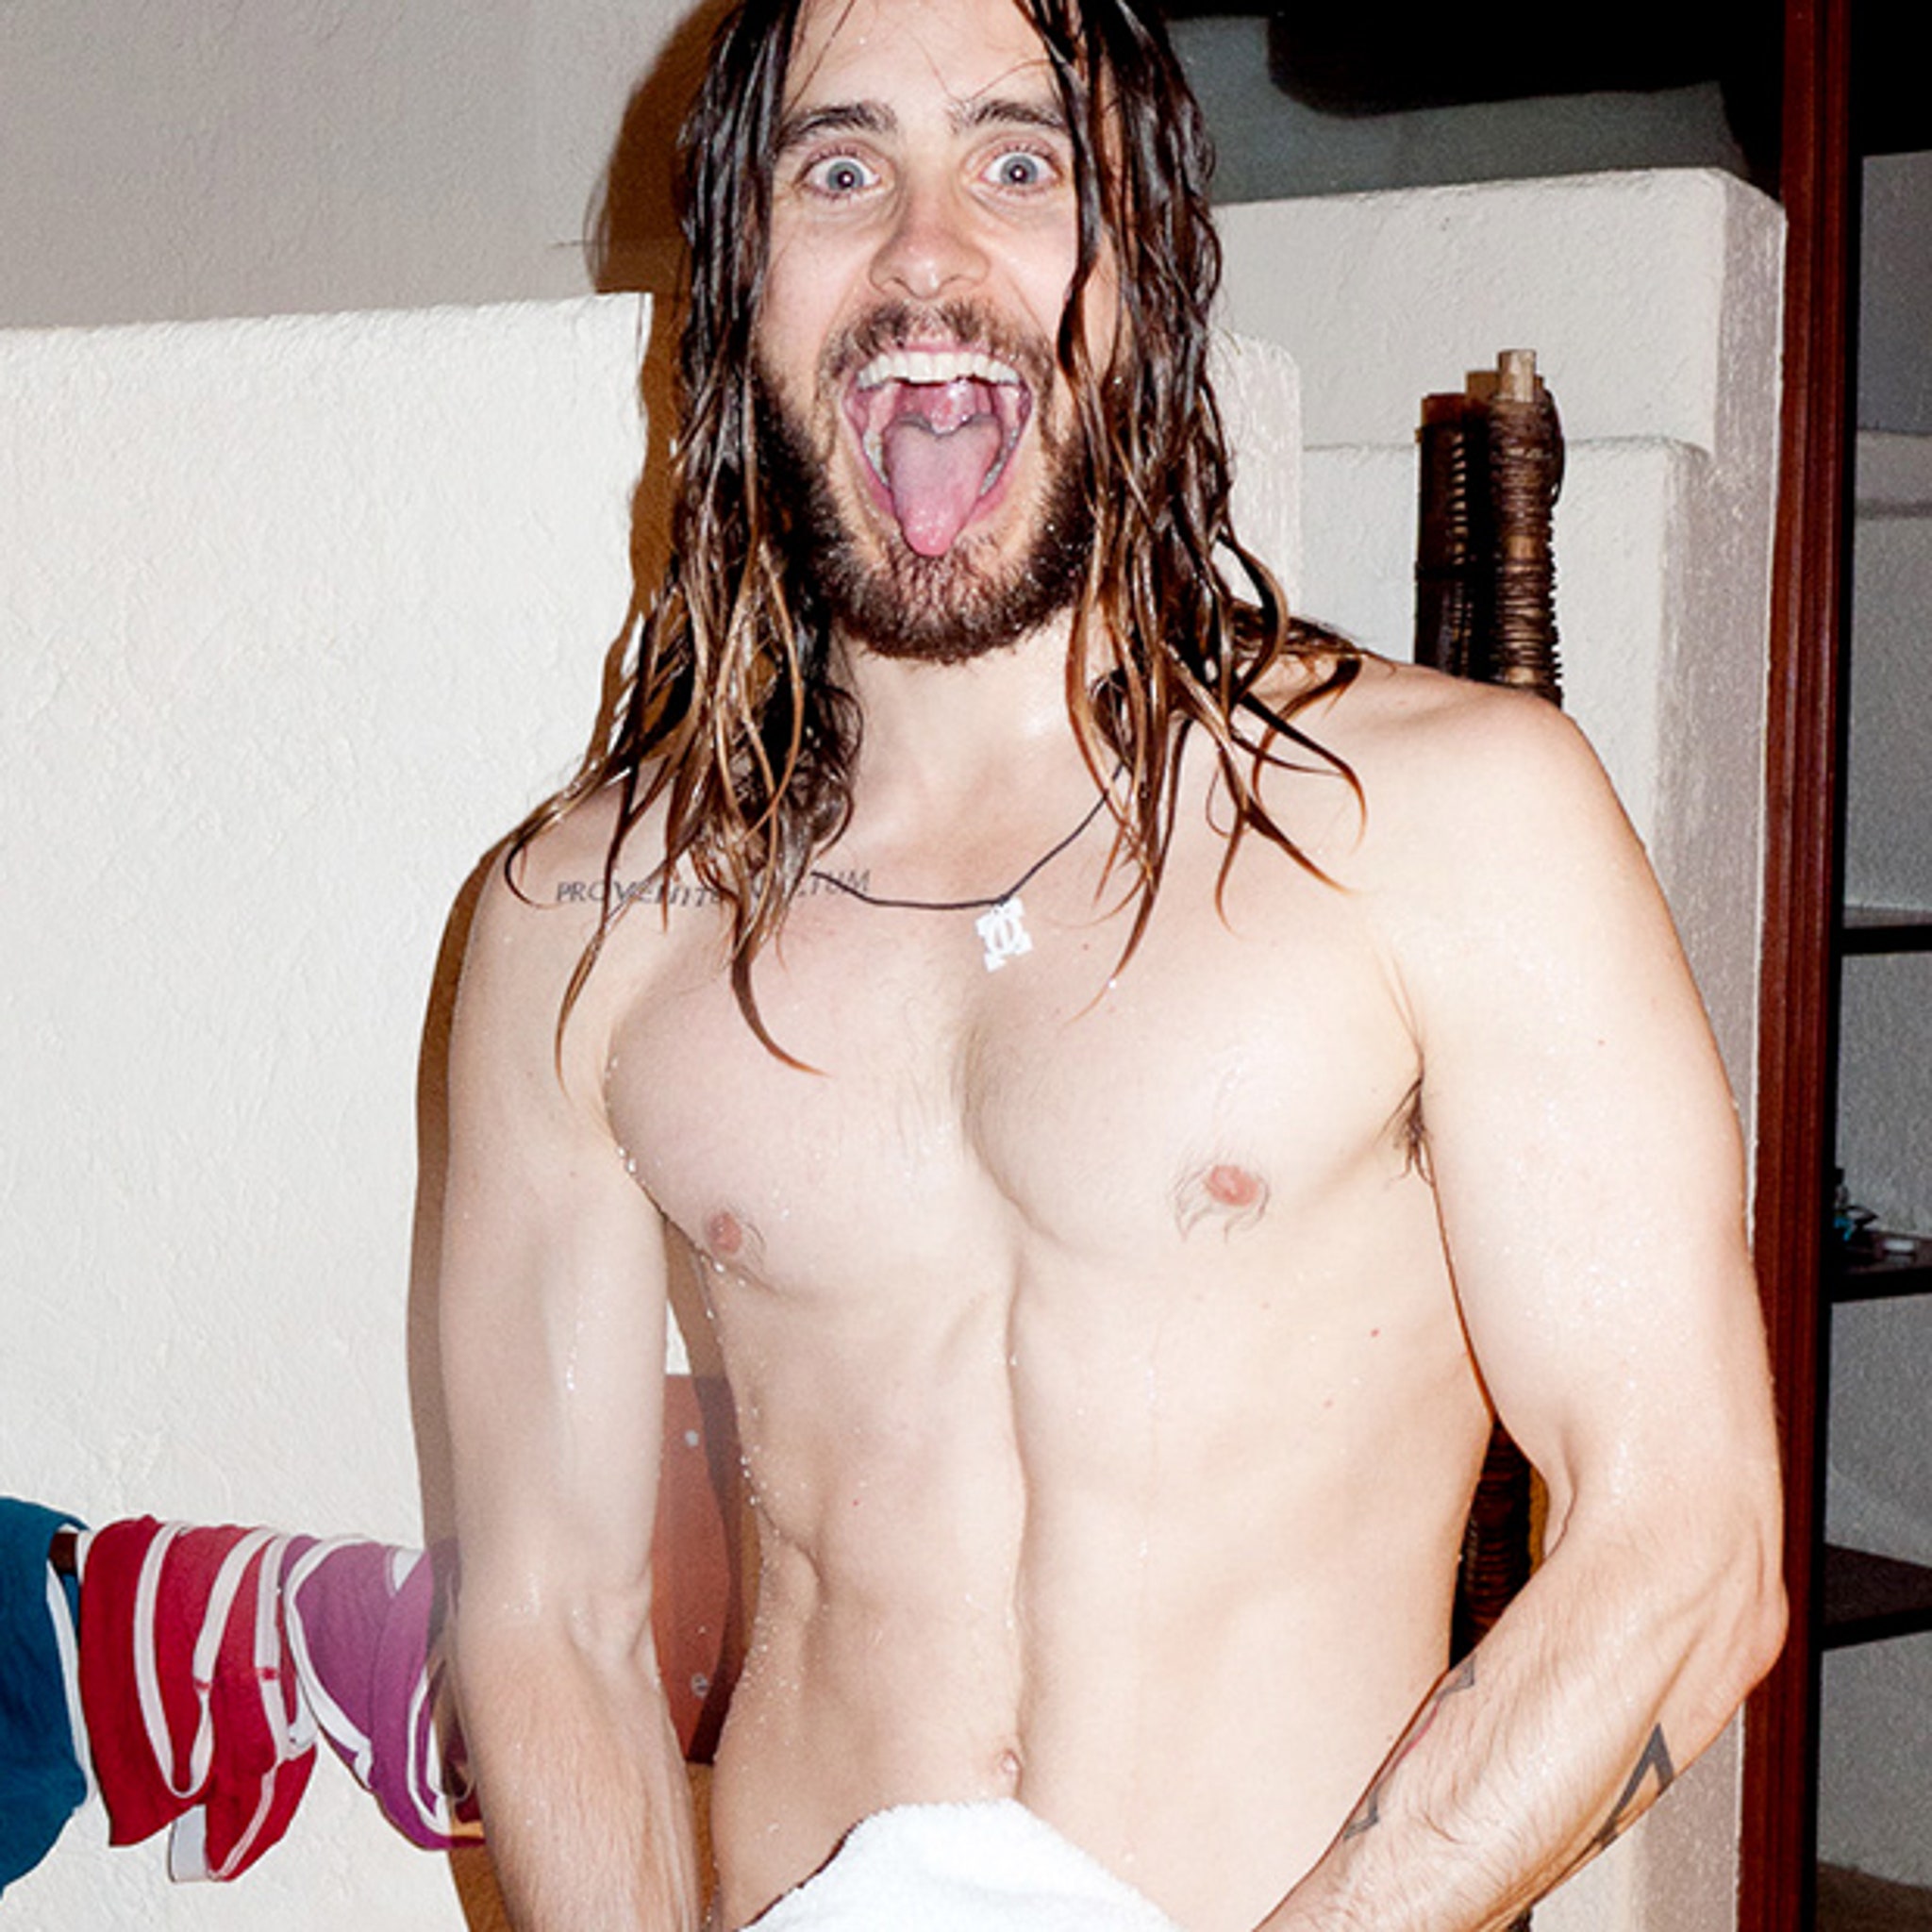 Jared Leto Nude Photos